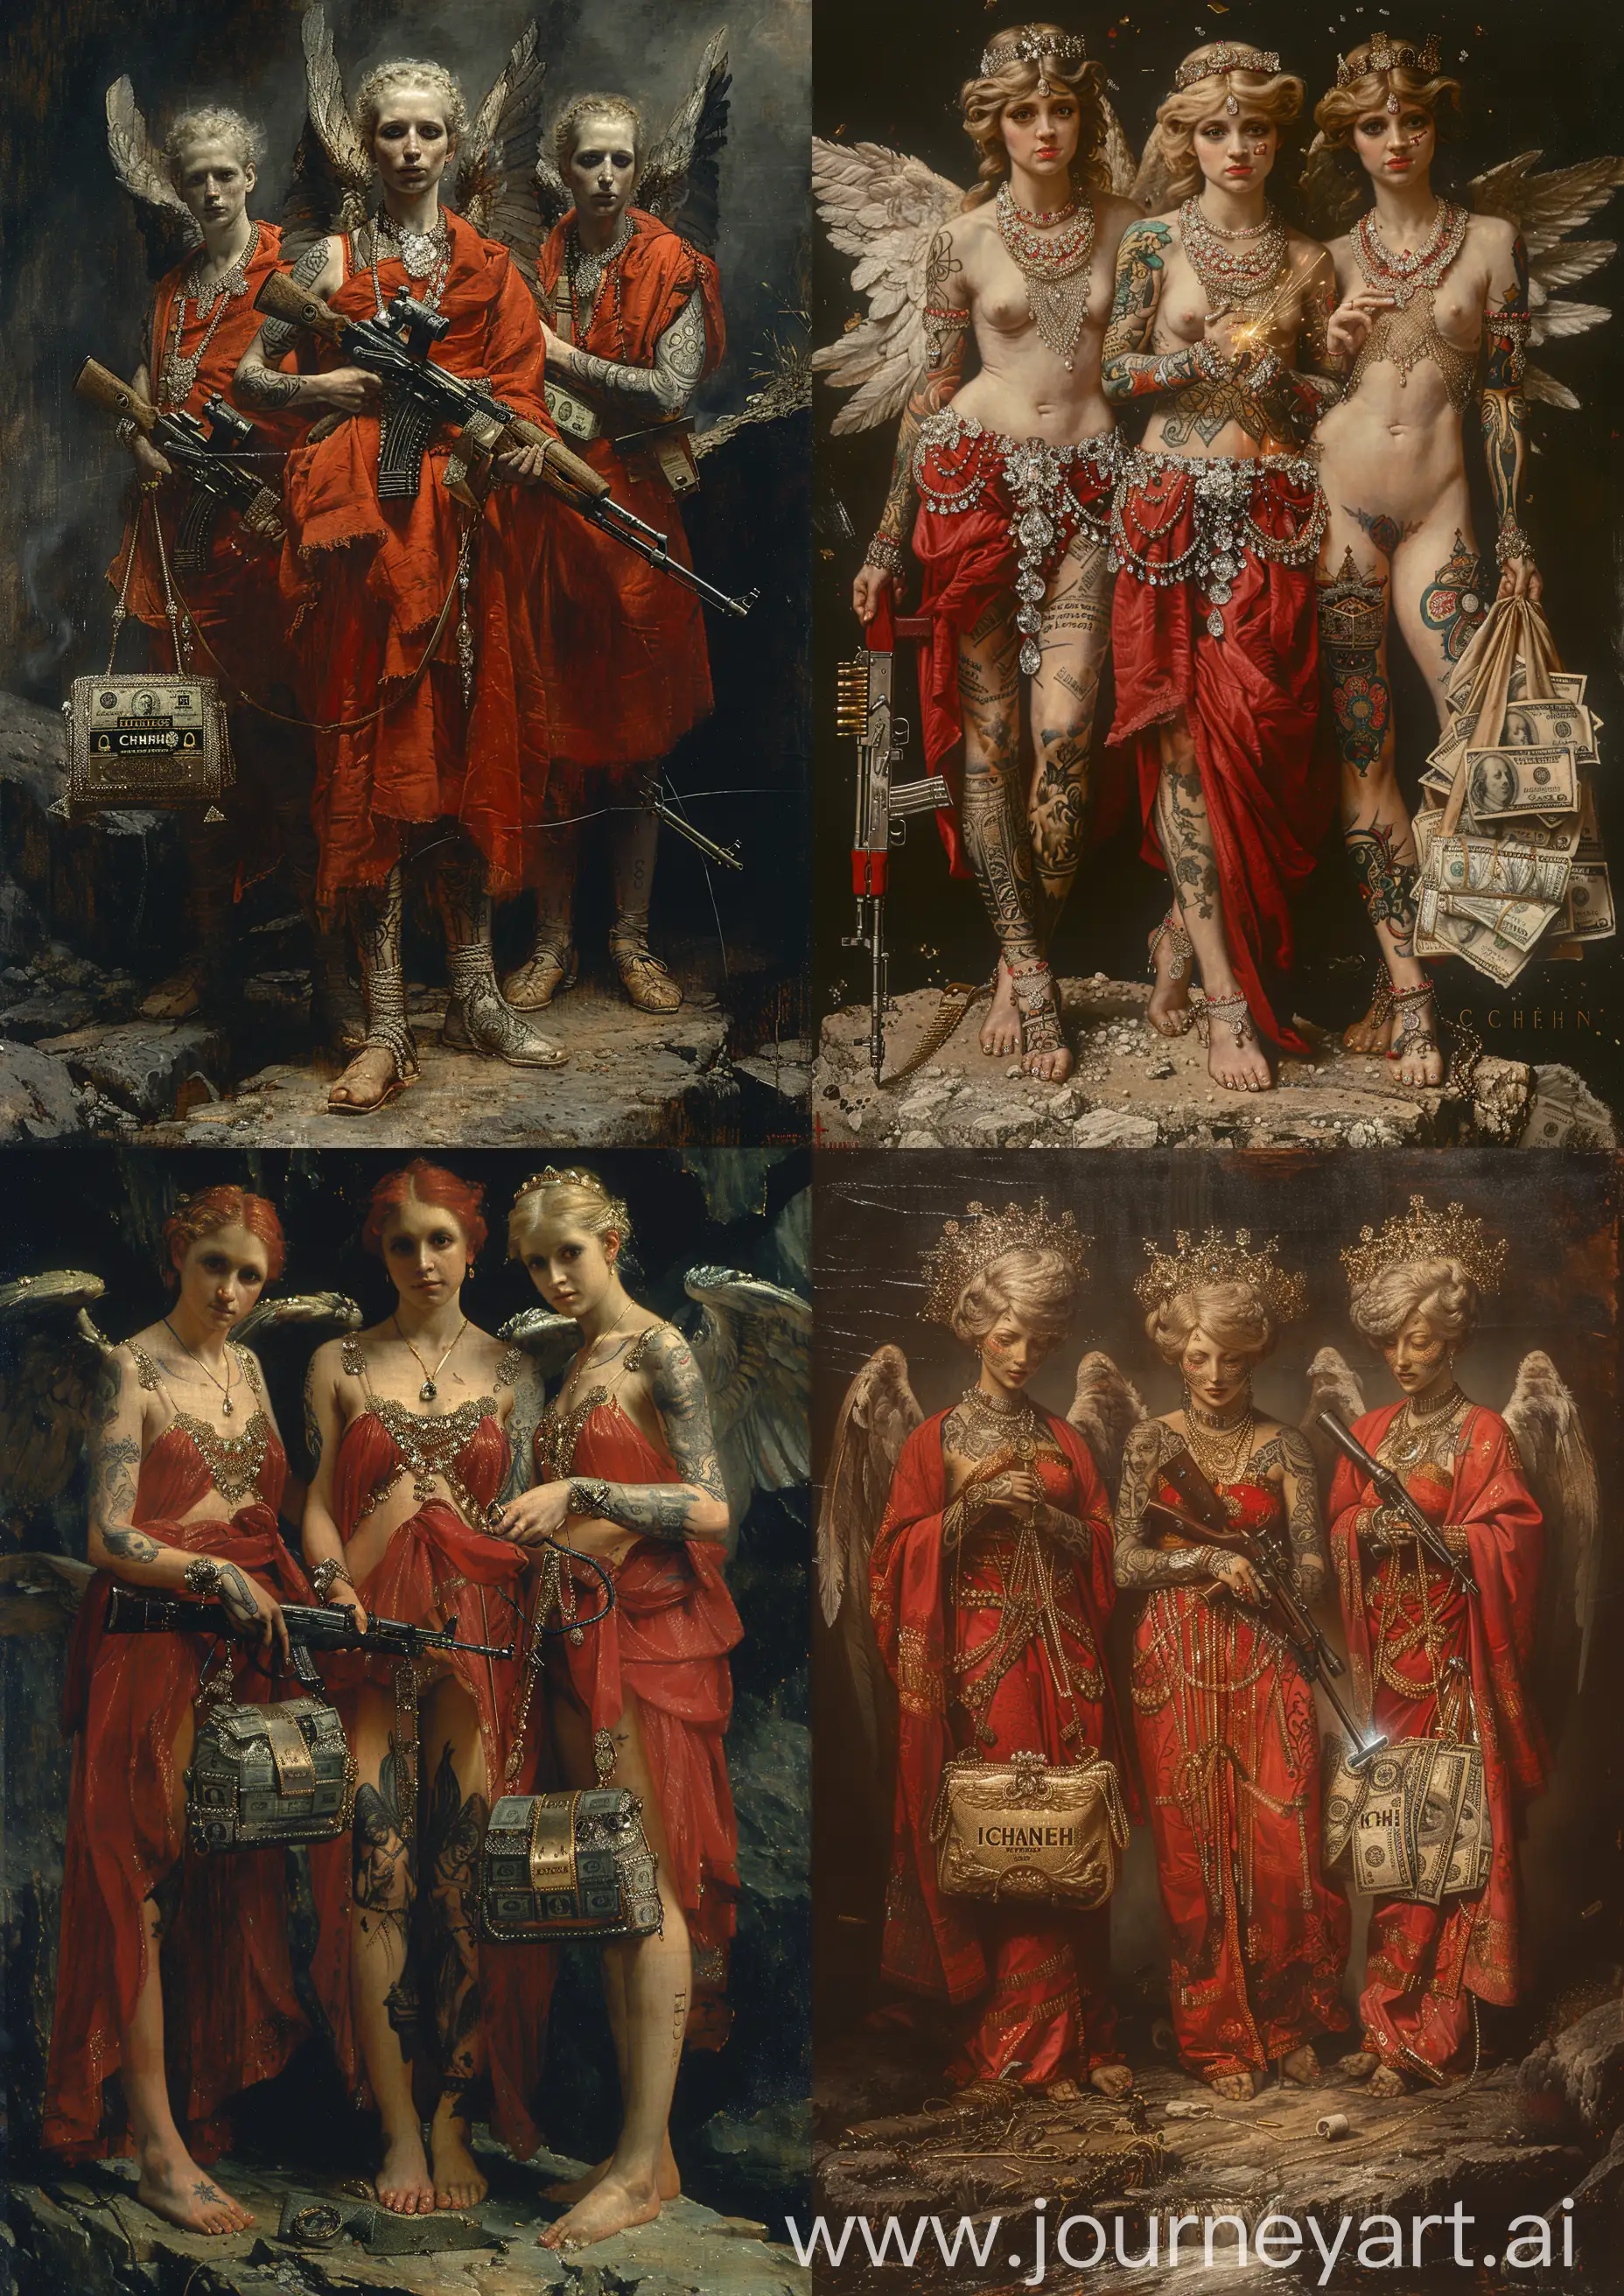 Three-Tattooed-Female-Angel-Warriors-Red-DiamondAdorned-Fighters-with-Kalashnikovs-and-Chanel-Bags